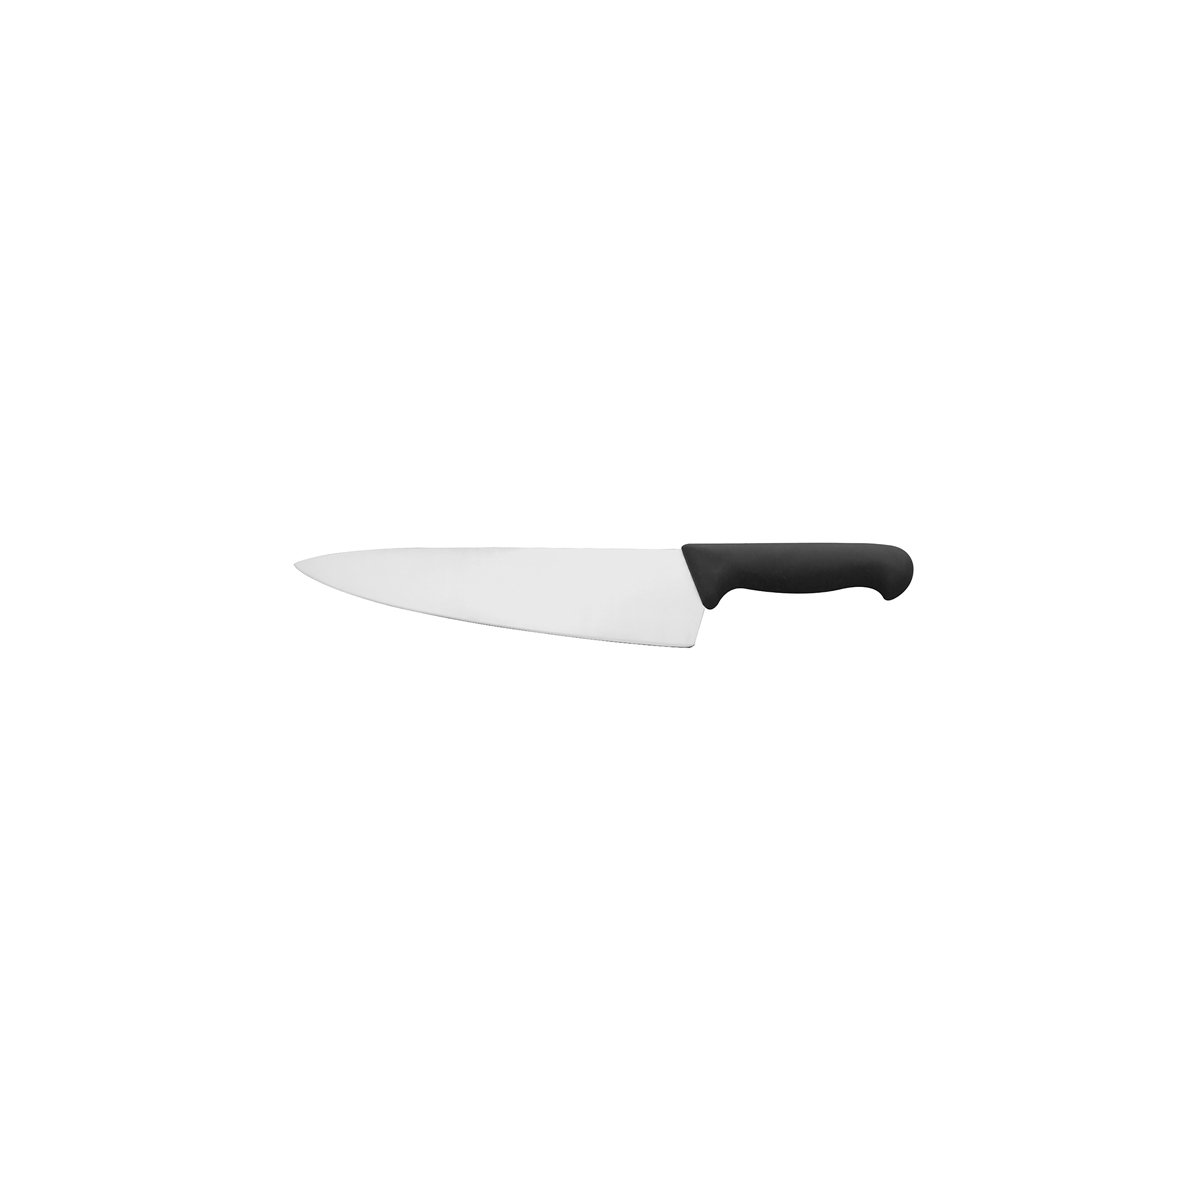 25106 Ivo Professional 55000 Chefs Knife 150mm Tomkin Australia Hospitality Supplies